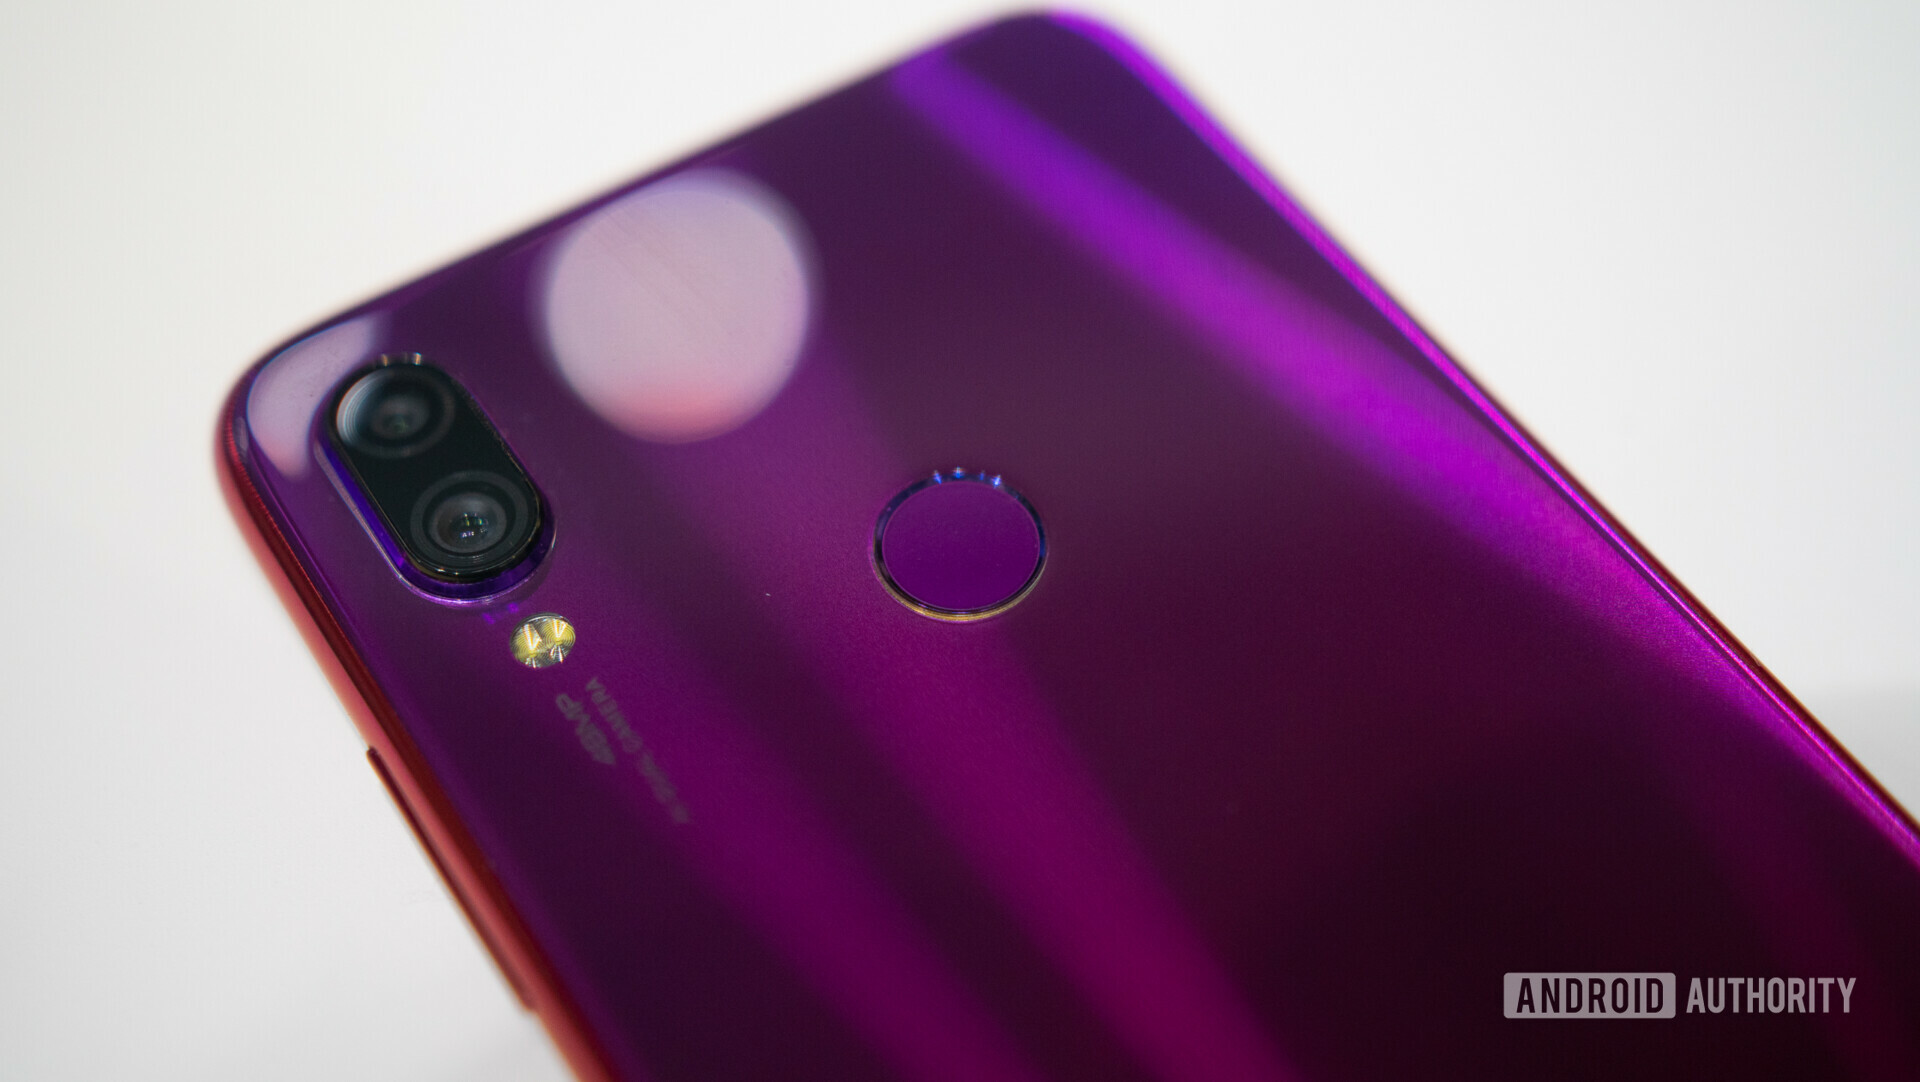 Backside photo of the Xiaomi redmi Note 7 focusing on the dual cameras and fingerprint sensor.